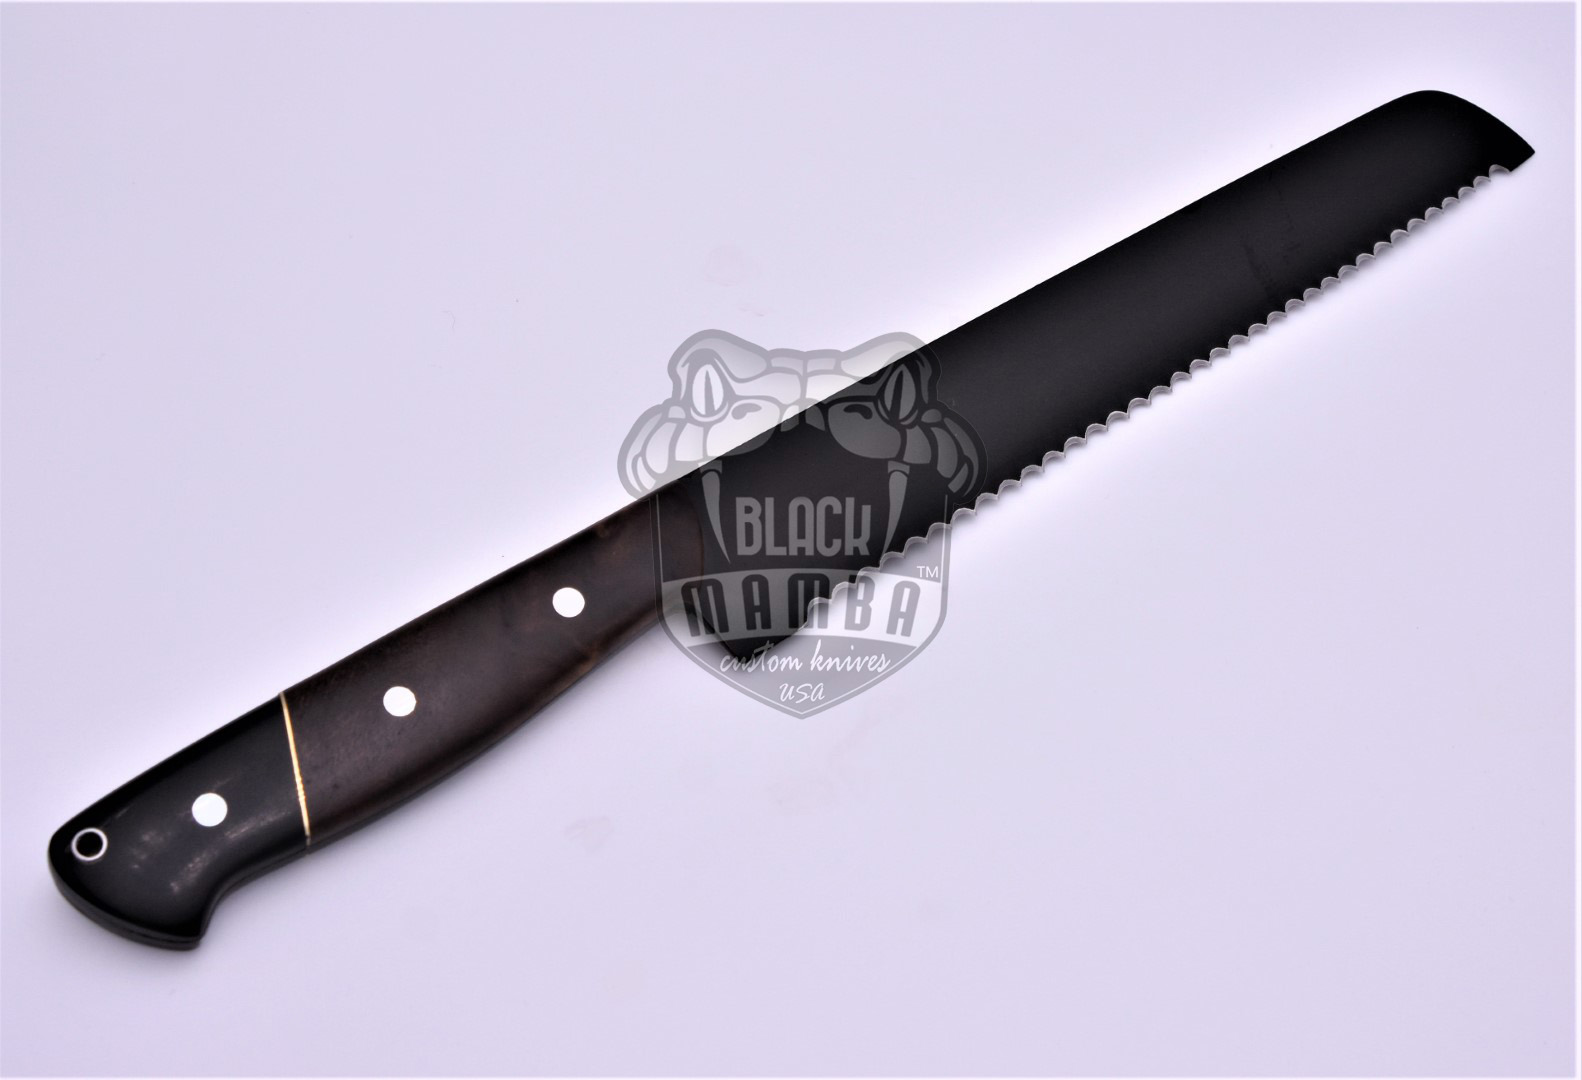 Bmk-706 Black Cats 440c Black Coated Chef Knives Set Hand Made